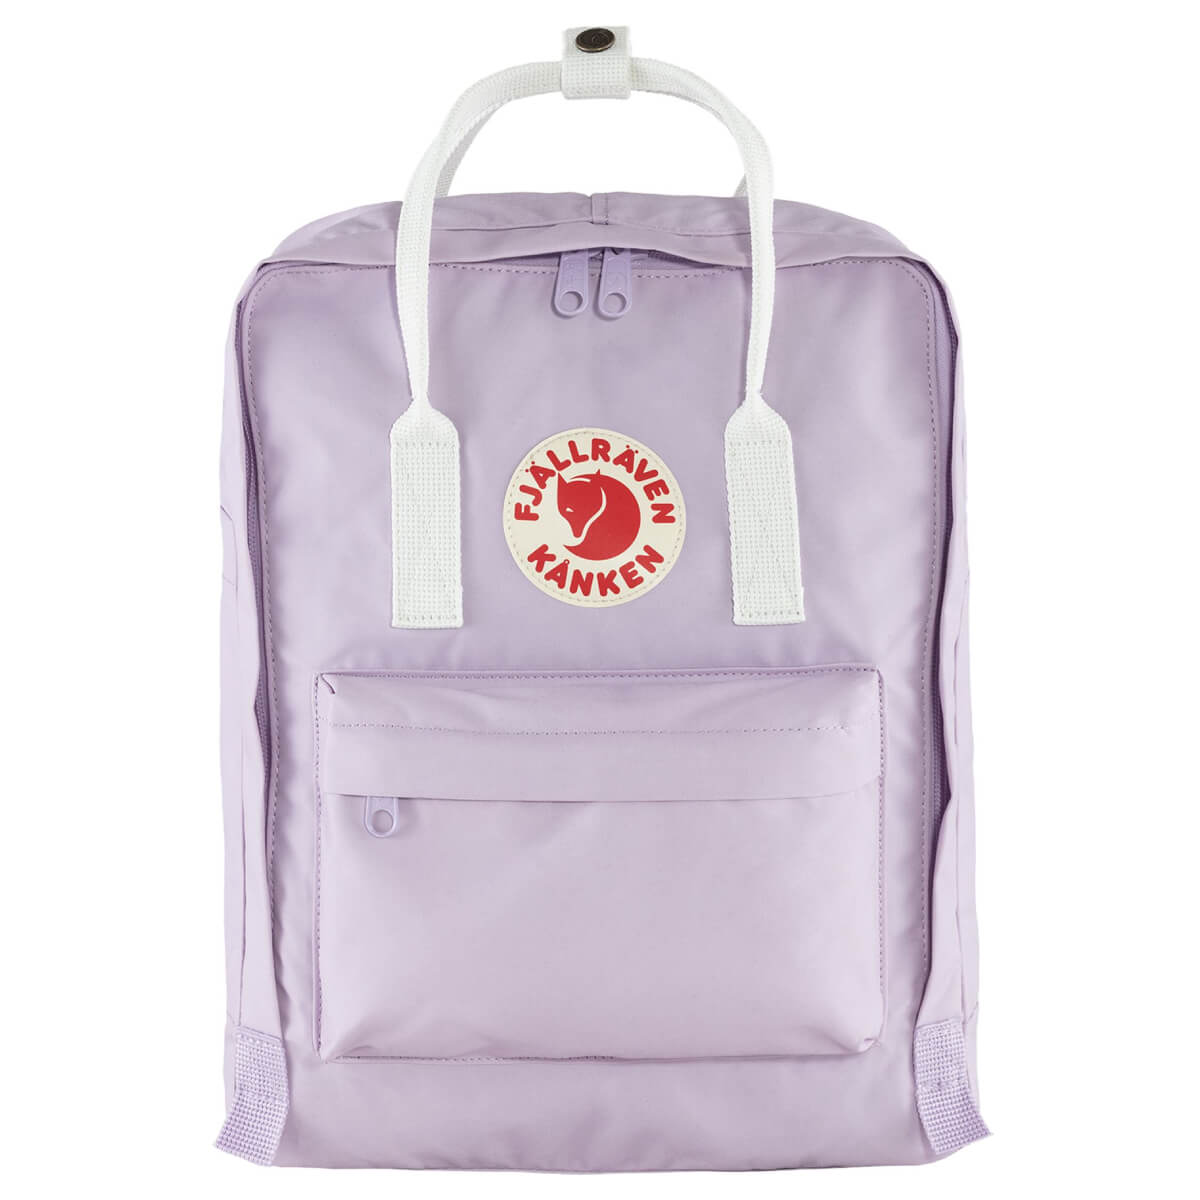 Міський рюкзак Fjallraven Kanken Pastel Lavender/Cool White 16 л 23510.457-106